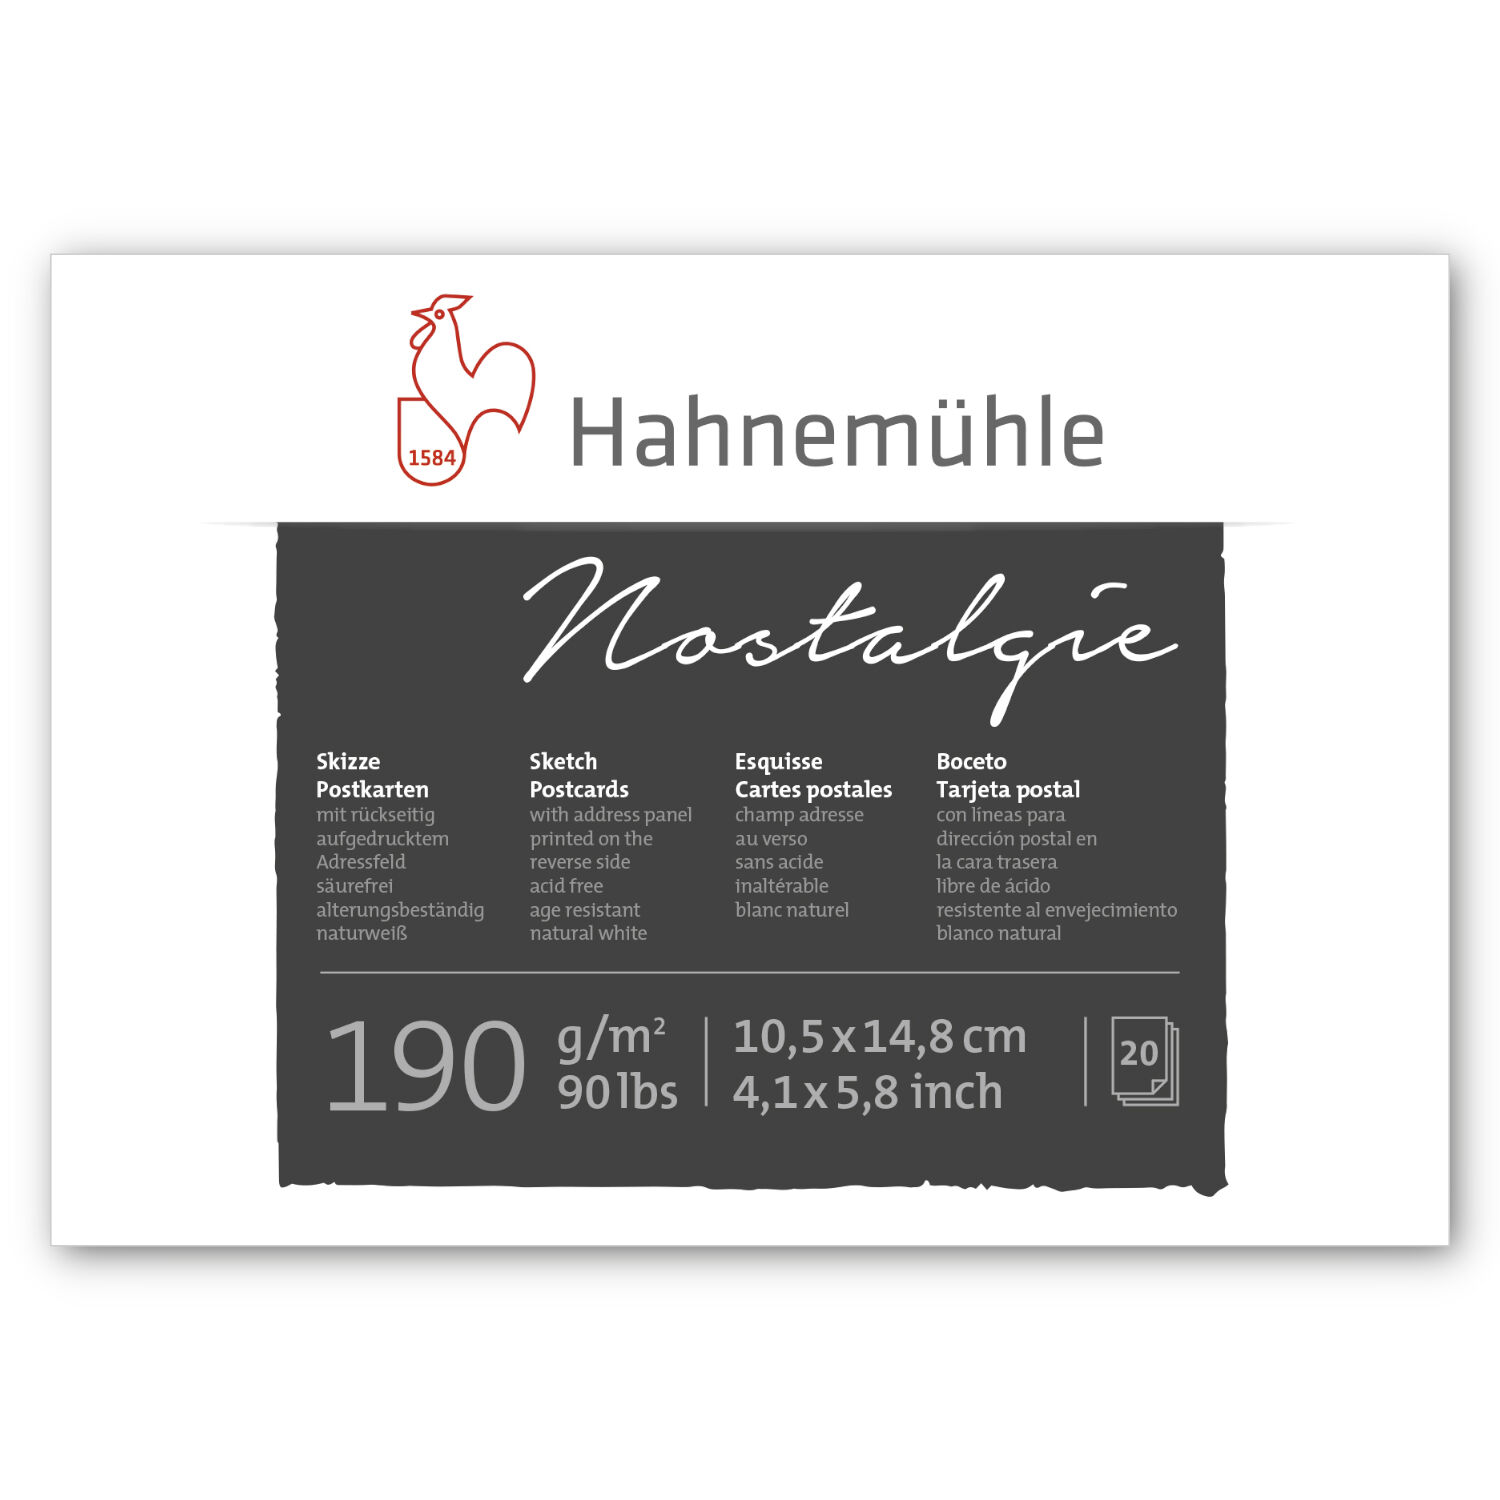 Hahnemhle Skizzenpostkartenblock, 190g/m, 10,5x14,8cm 20 Blatt